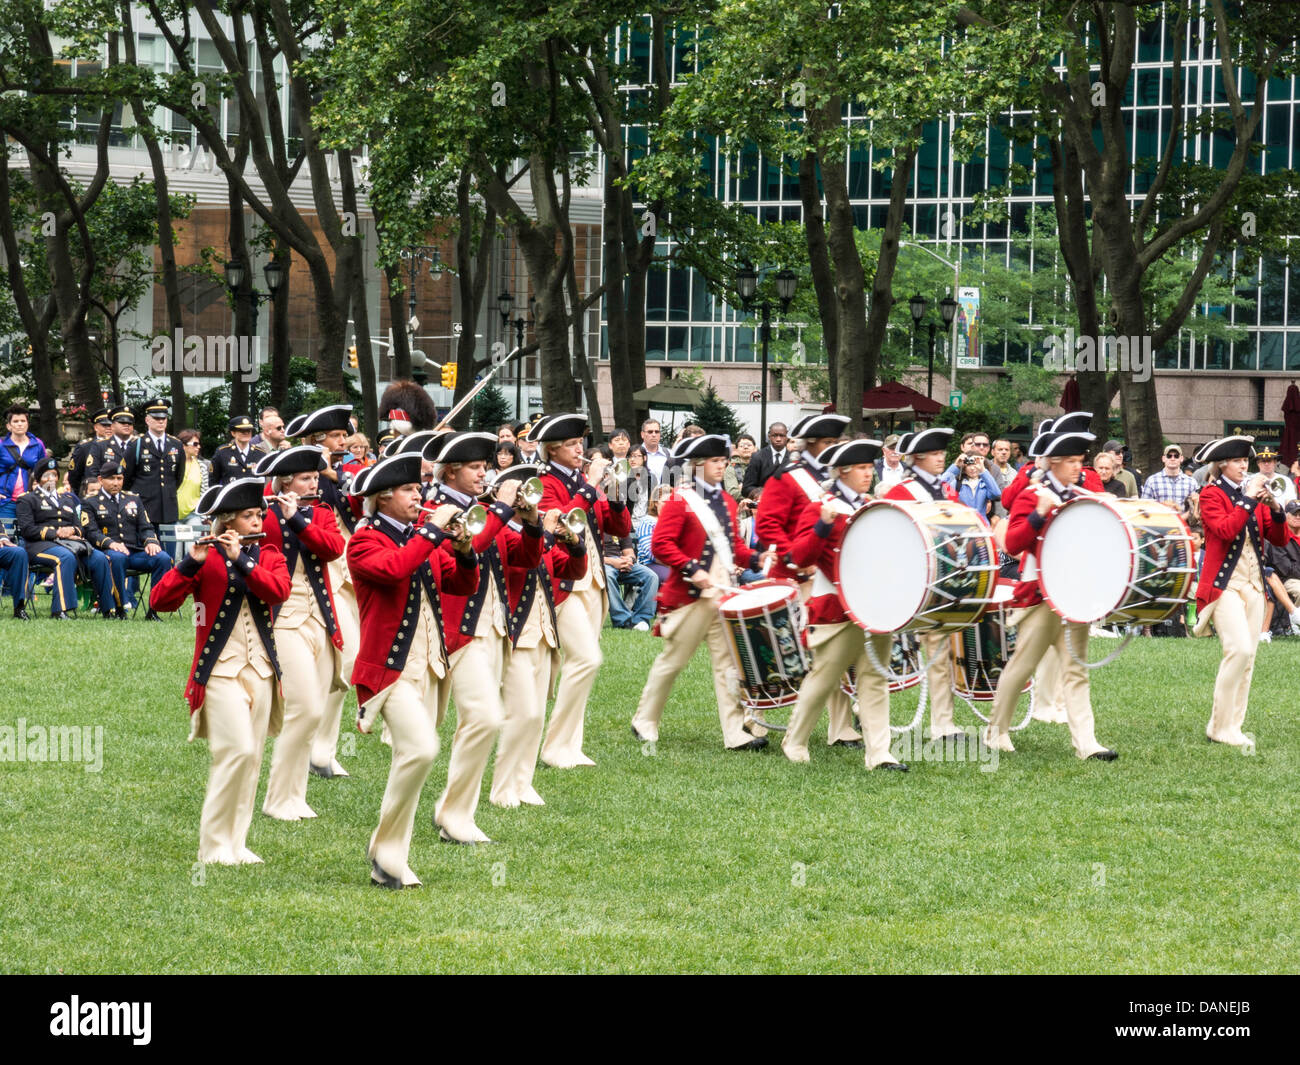 Celebration of 238th Army Birthday in Bryant Park, NYC Stock Photo